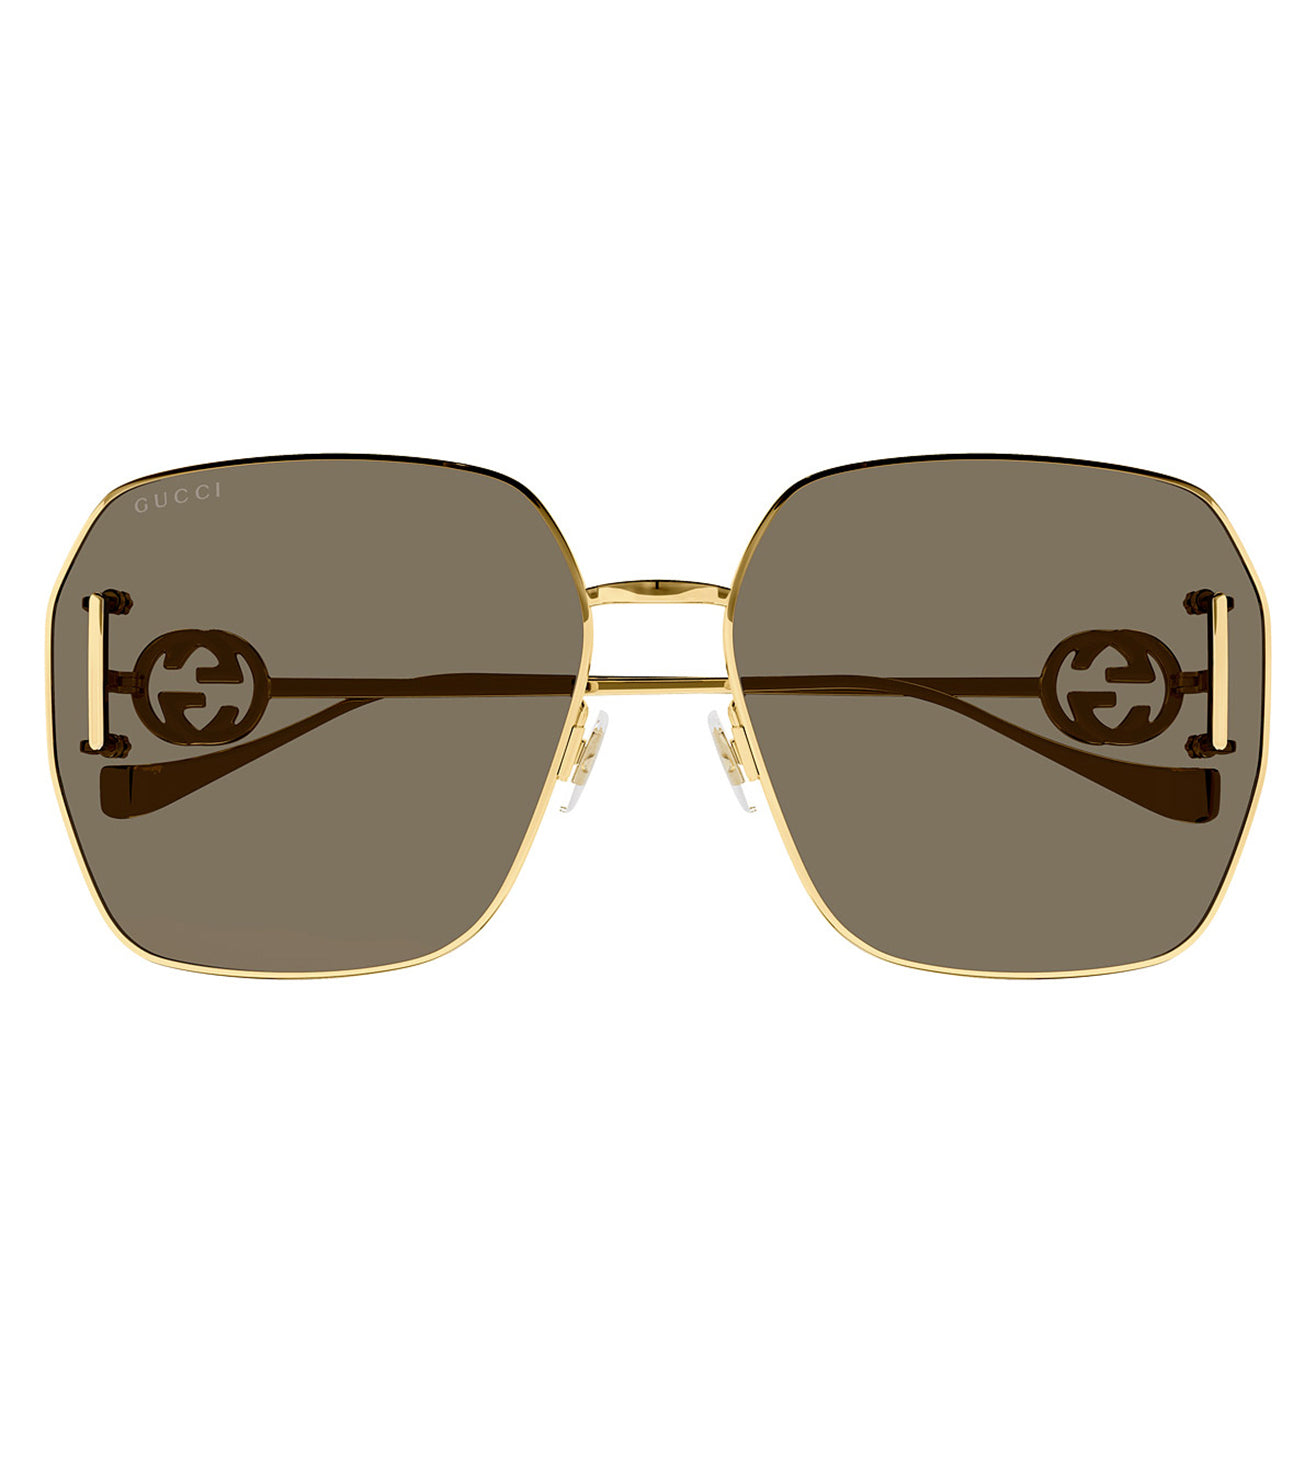 Gucci Women's Brown Oversized Sunglasses